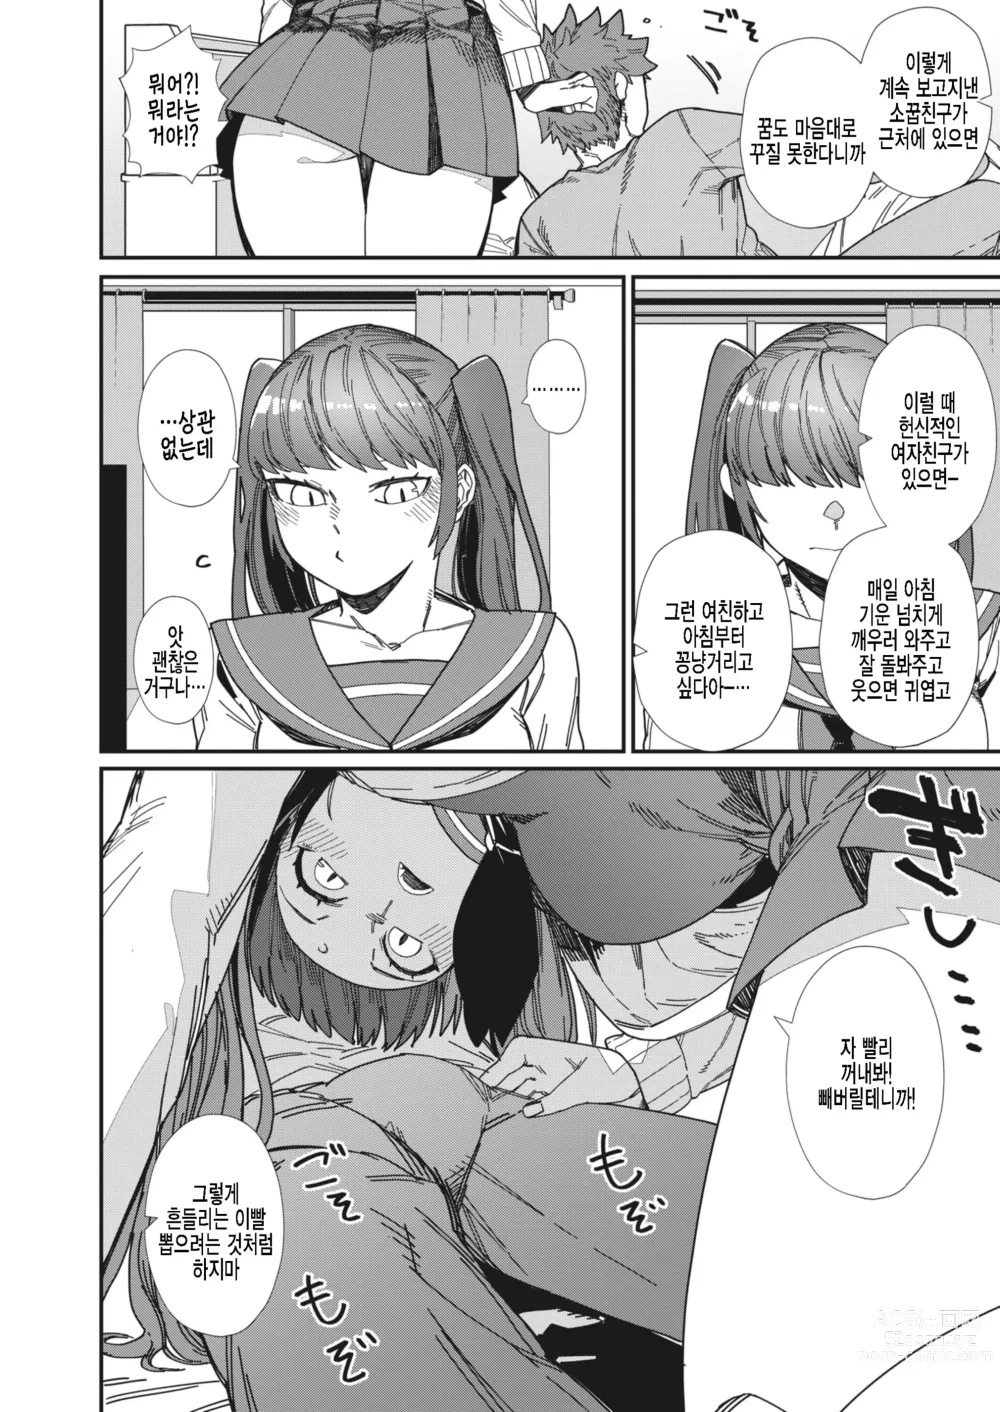 Page 2 of manga 정말좋아!